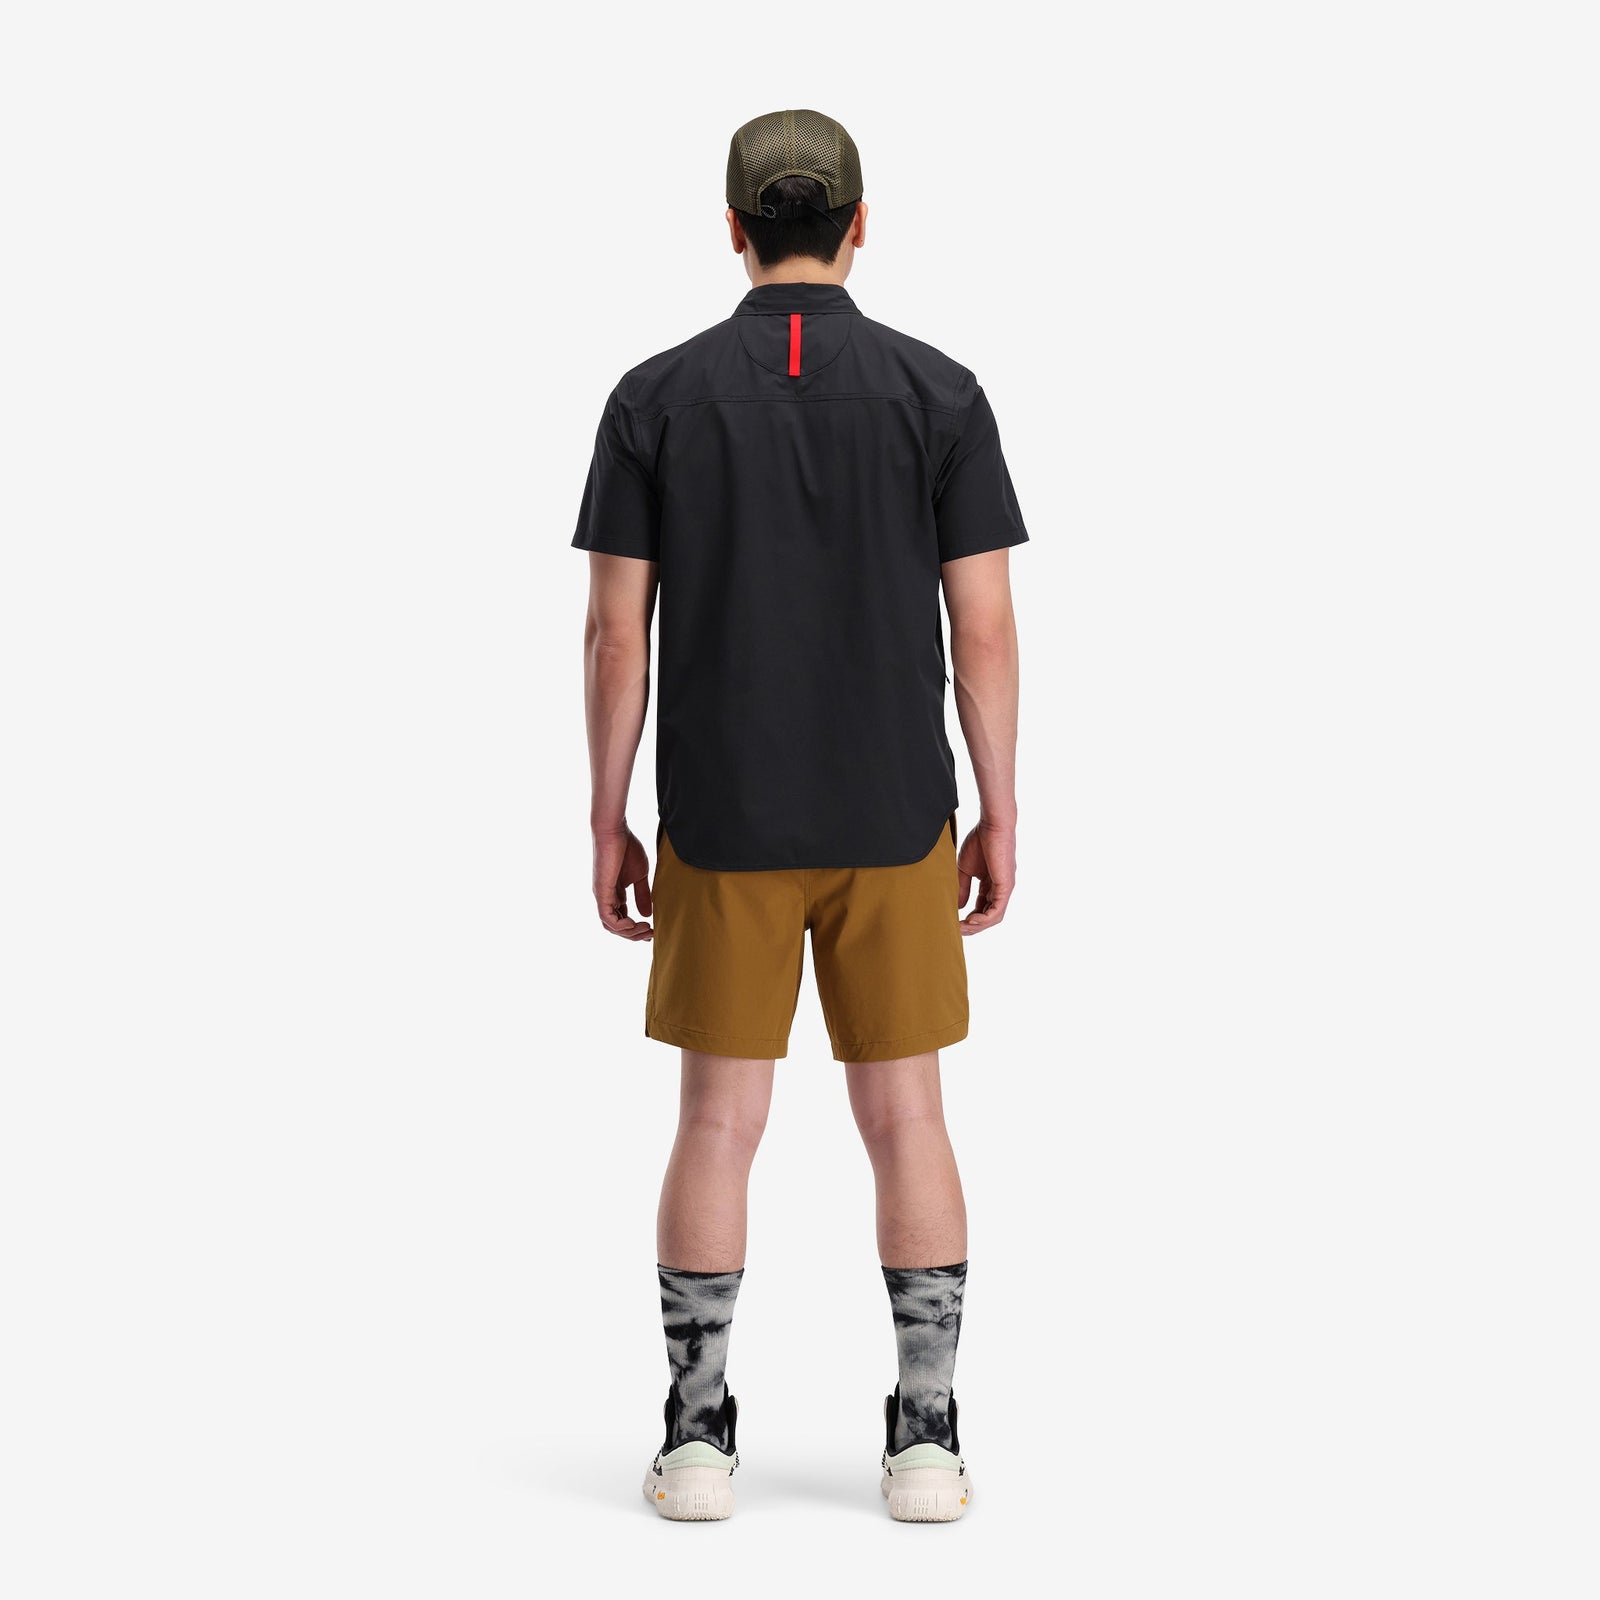 Back model shot of Topo Designs Men's Global lightweight quick dry travel Shorts in "Dark Khaki" green.